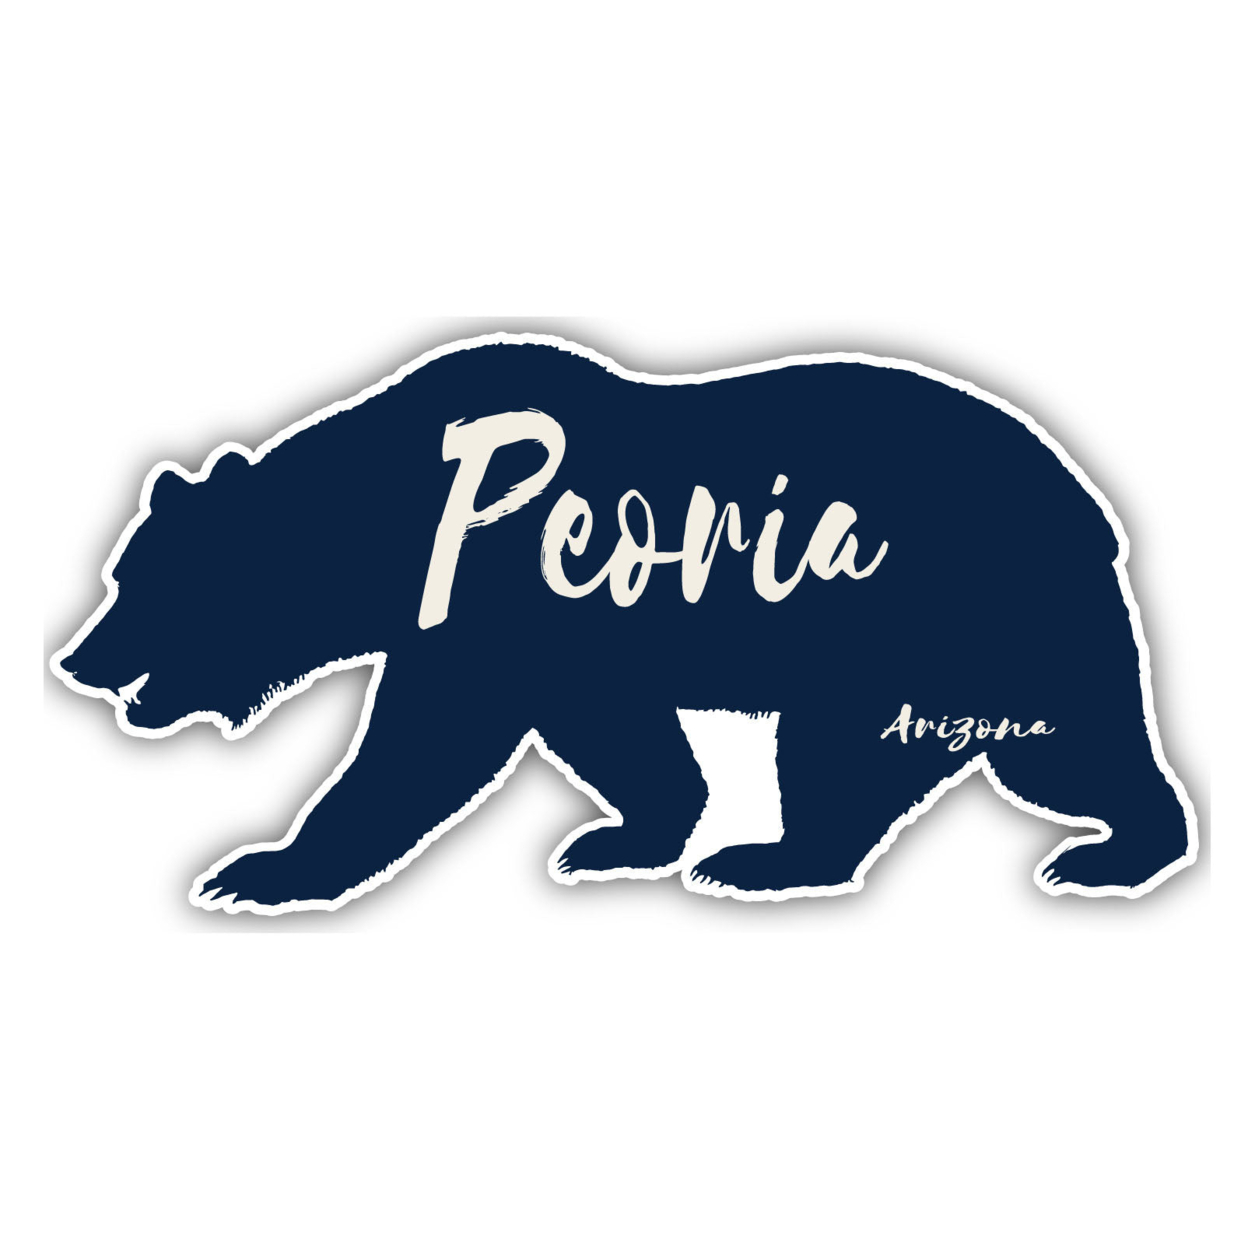 Peoria Arizona Souvenir Decorative Stickers (Choose Theme And Size) - Single Unit, 4-Inch, Bear